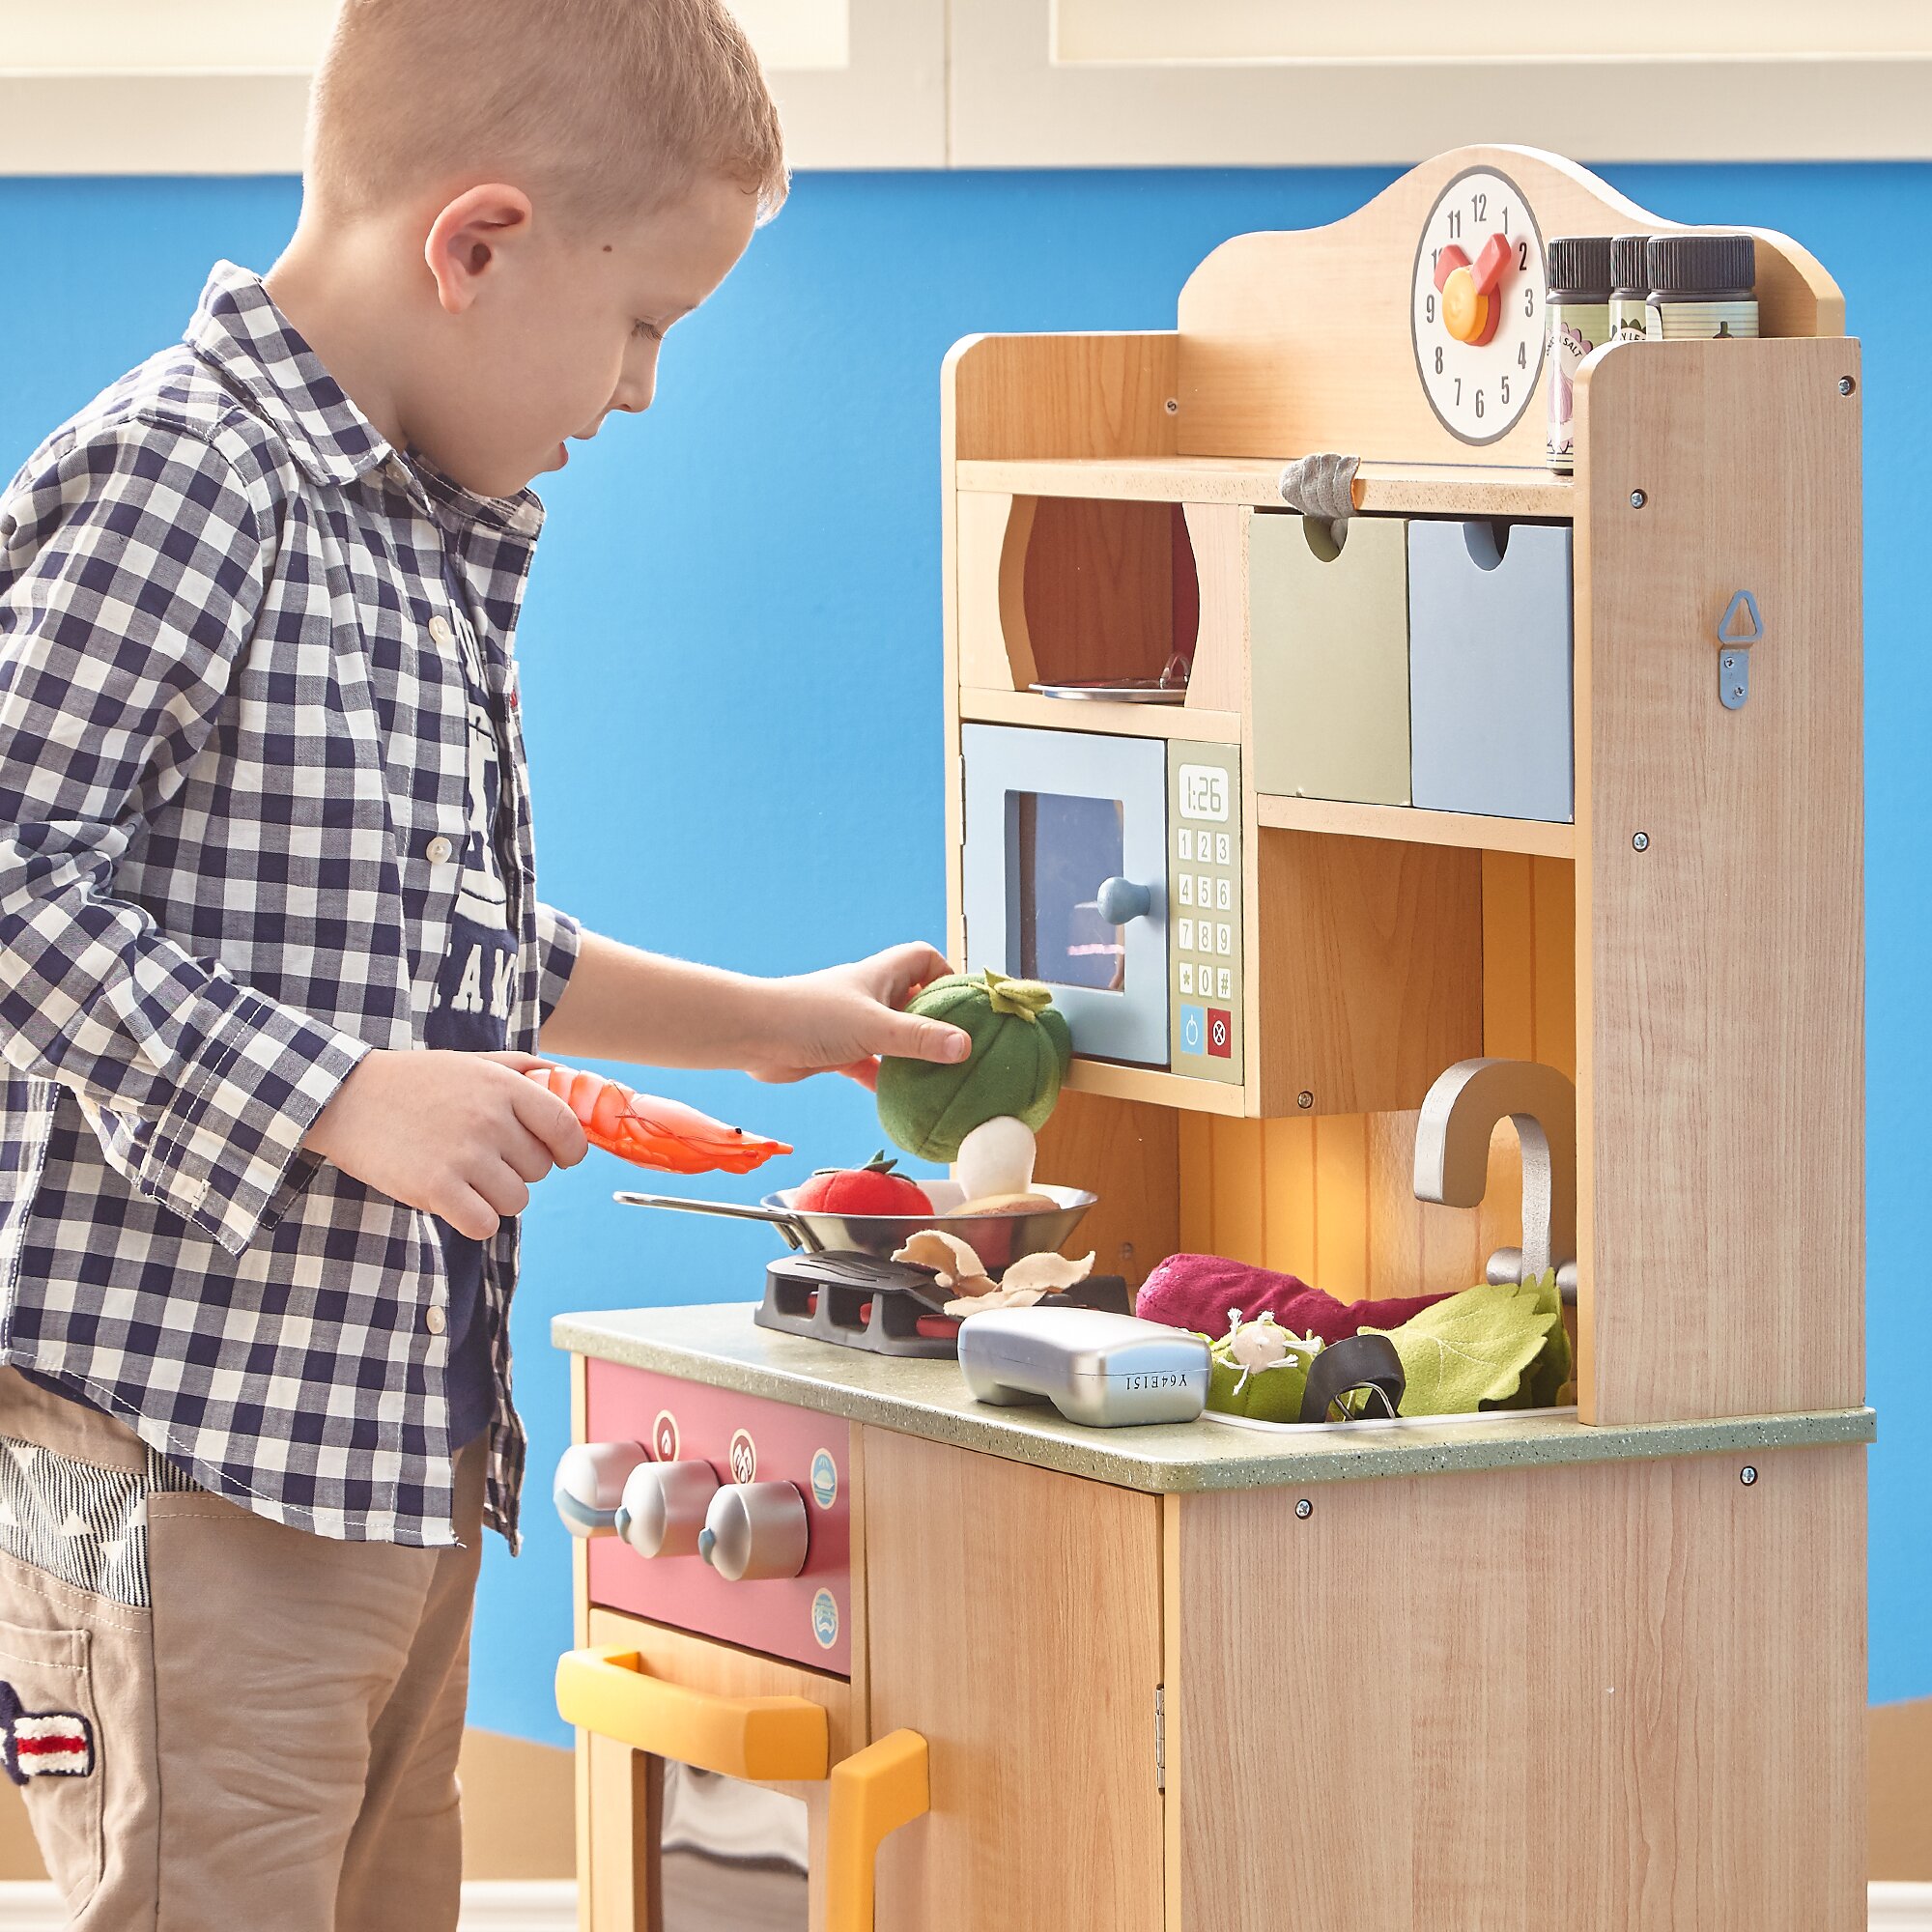 Play Kitchen Accessories - Play Kitchen Accessories, Pretend Kitchen Sets Kids Play